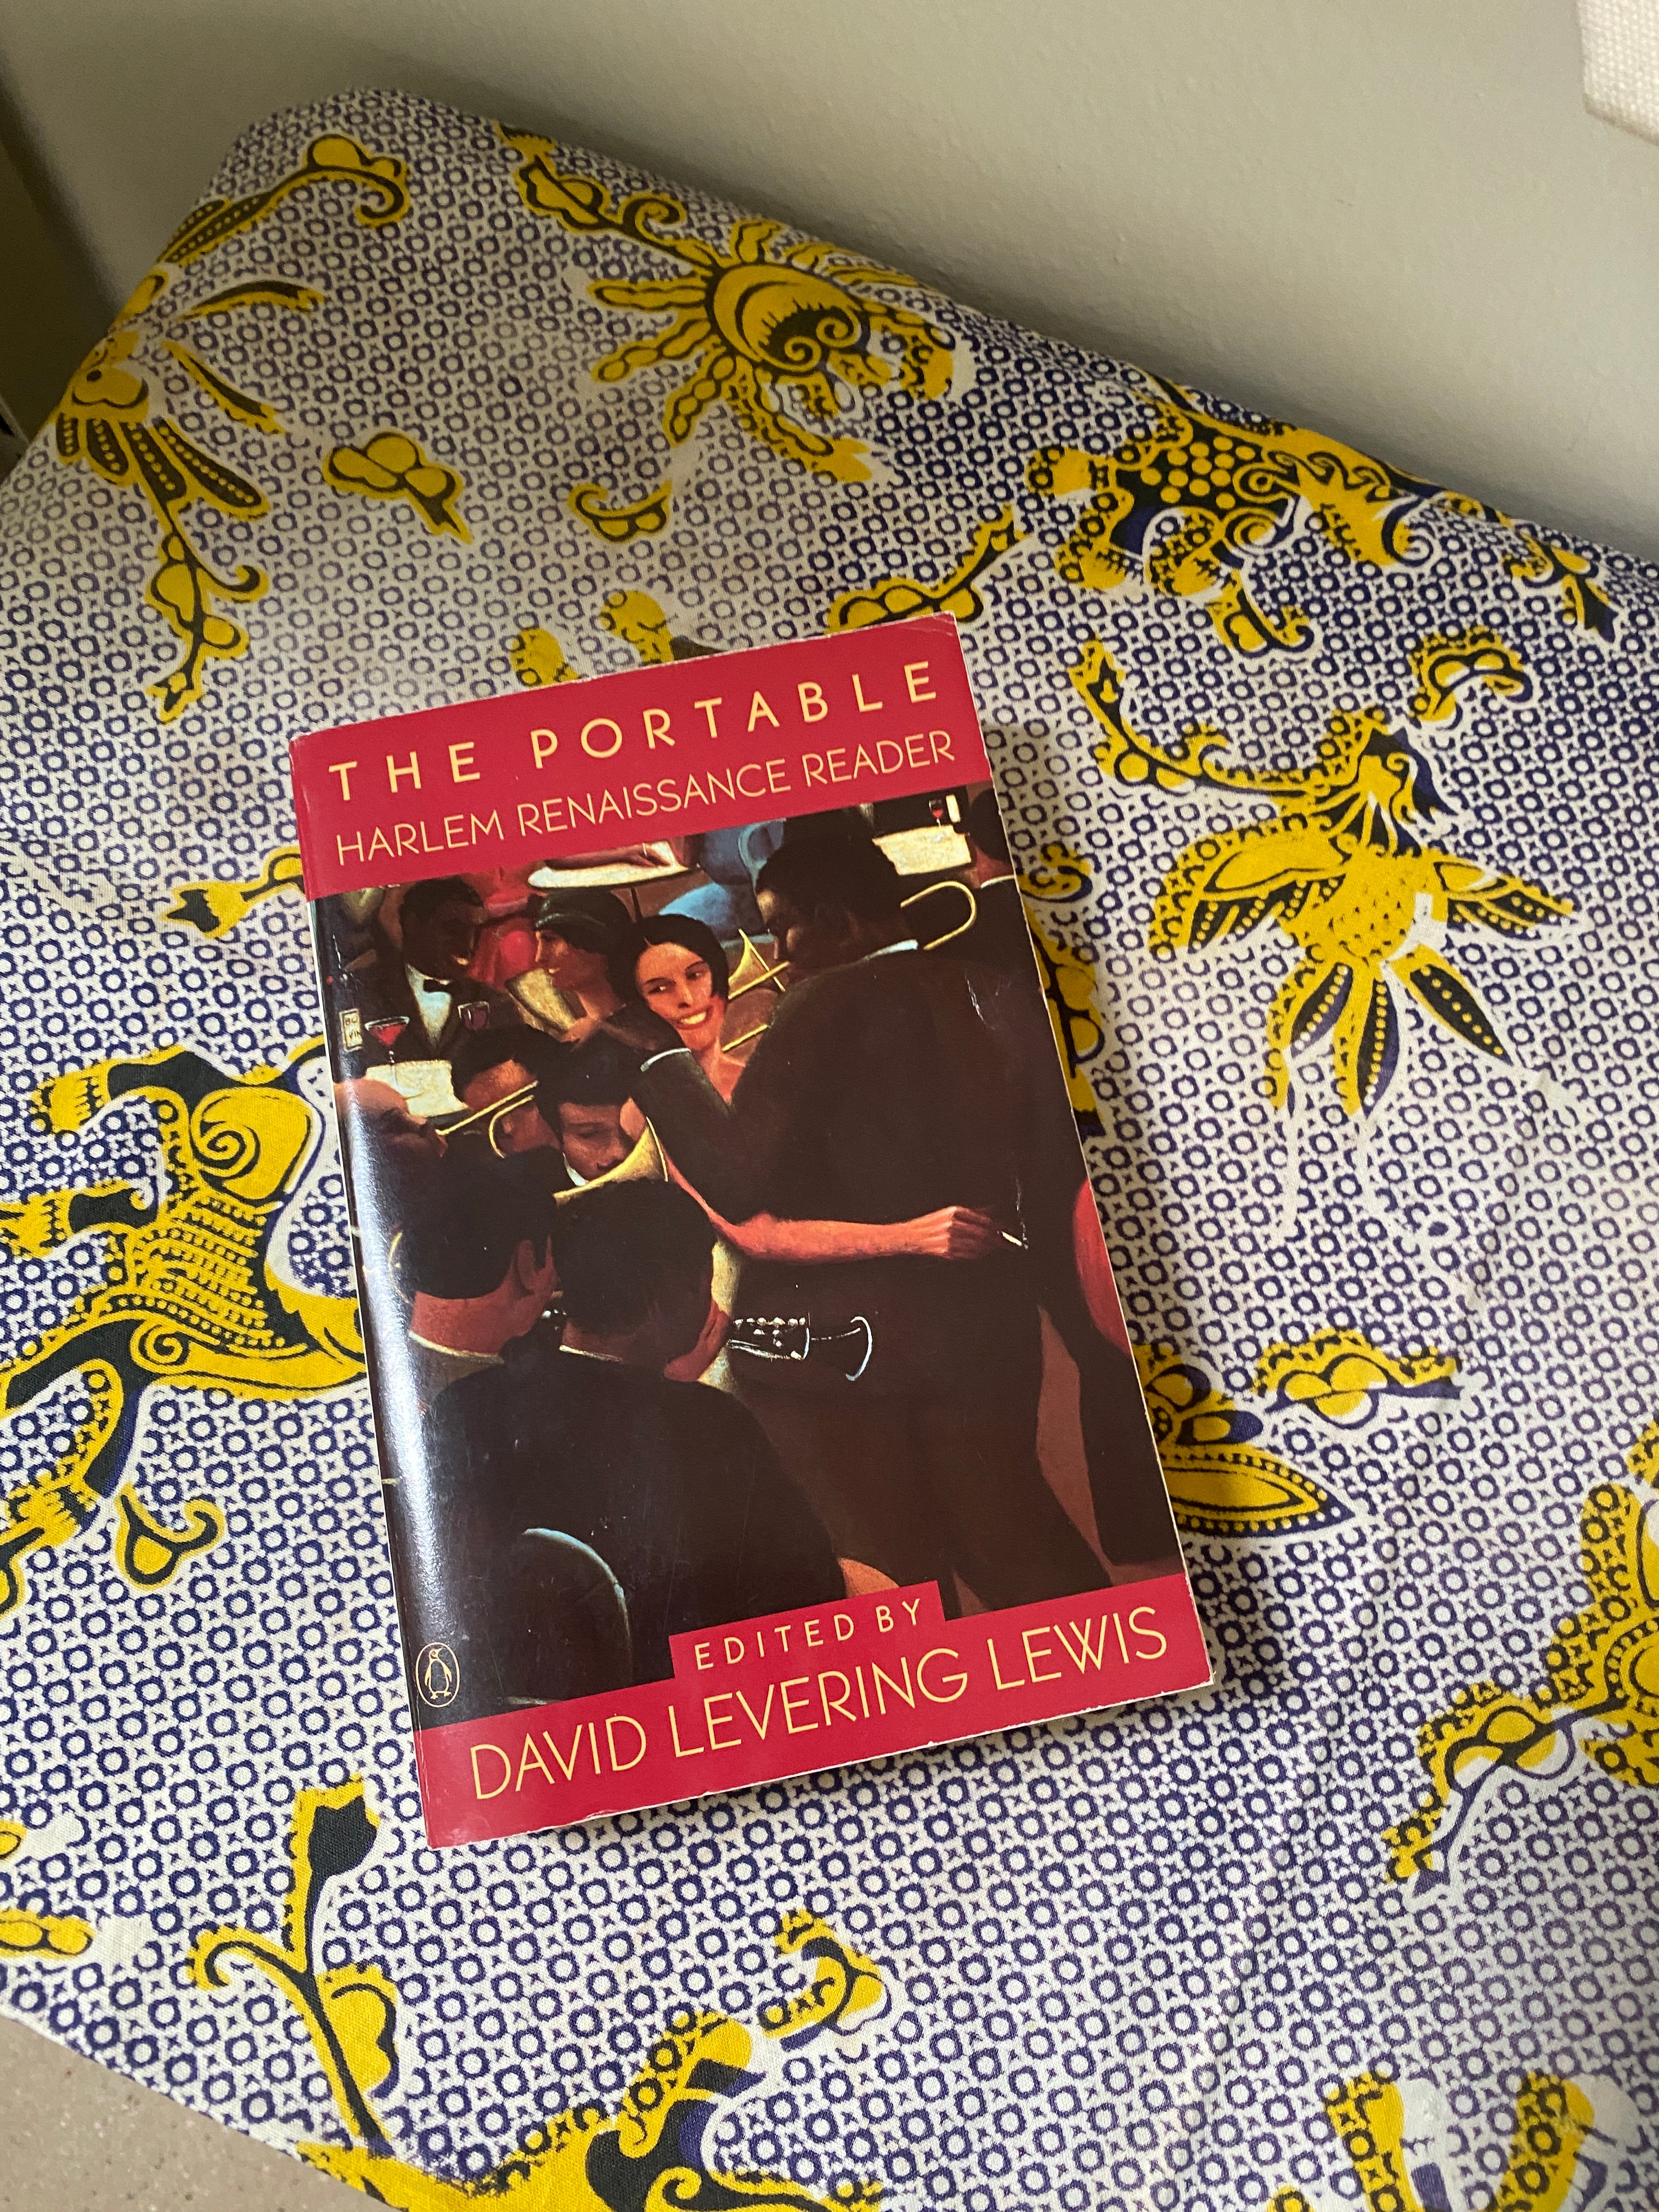 The Portable Harlem Renaissance Reader edited by David Levering Lewis (Penguin Trade)